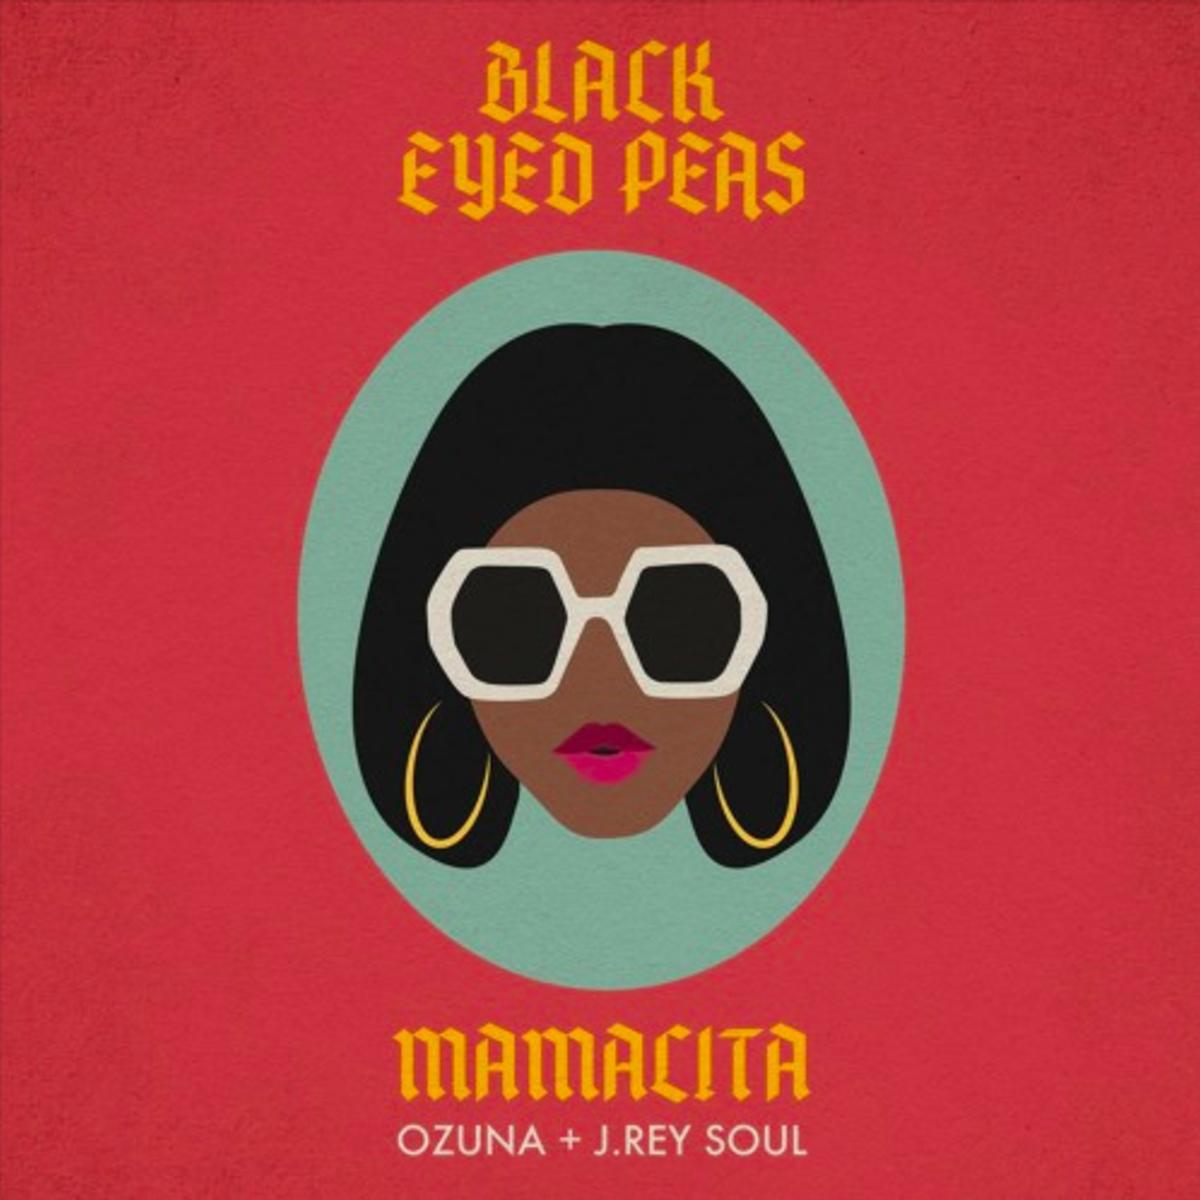 Black Eyed Peas Calls On Ozuna & J Rey Soul For “Mamacita”